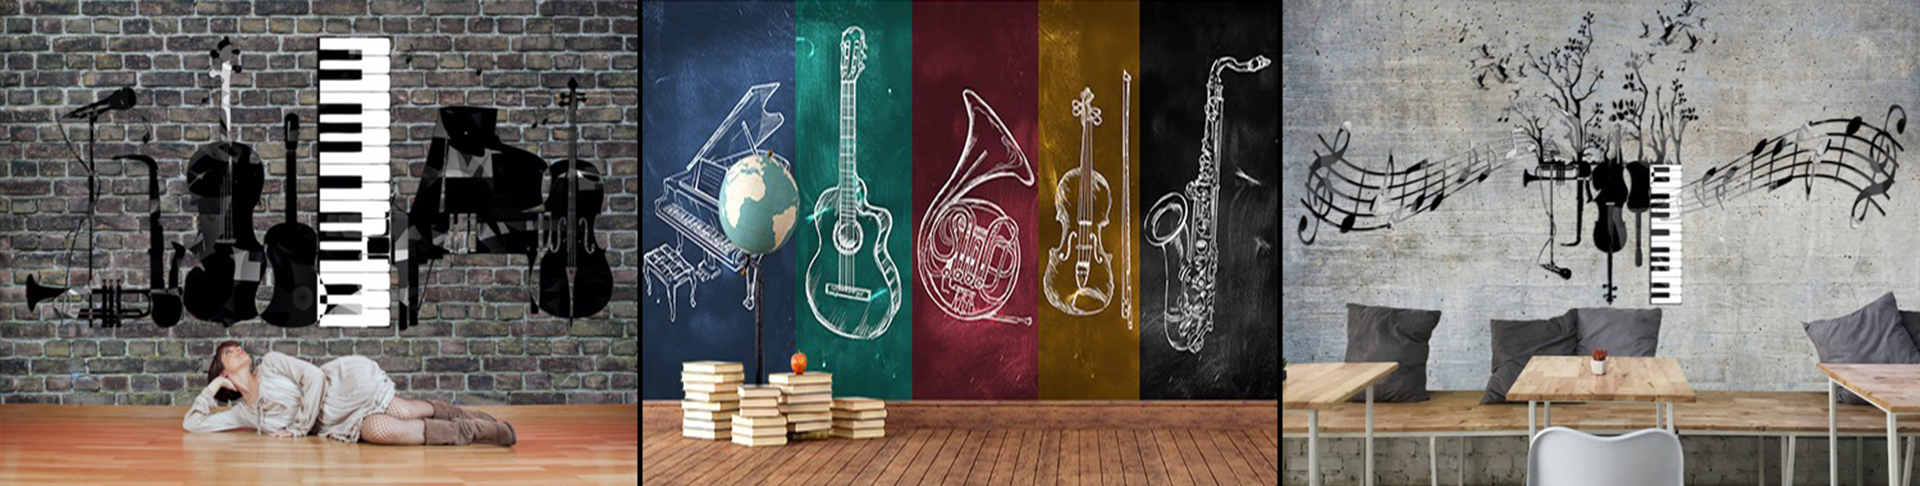 Papel Pintado Musical - Murales Musicales 3D